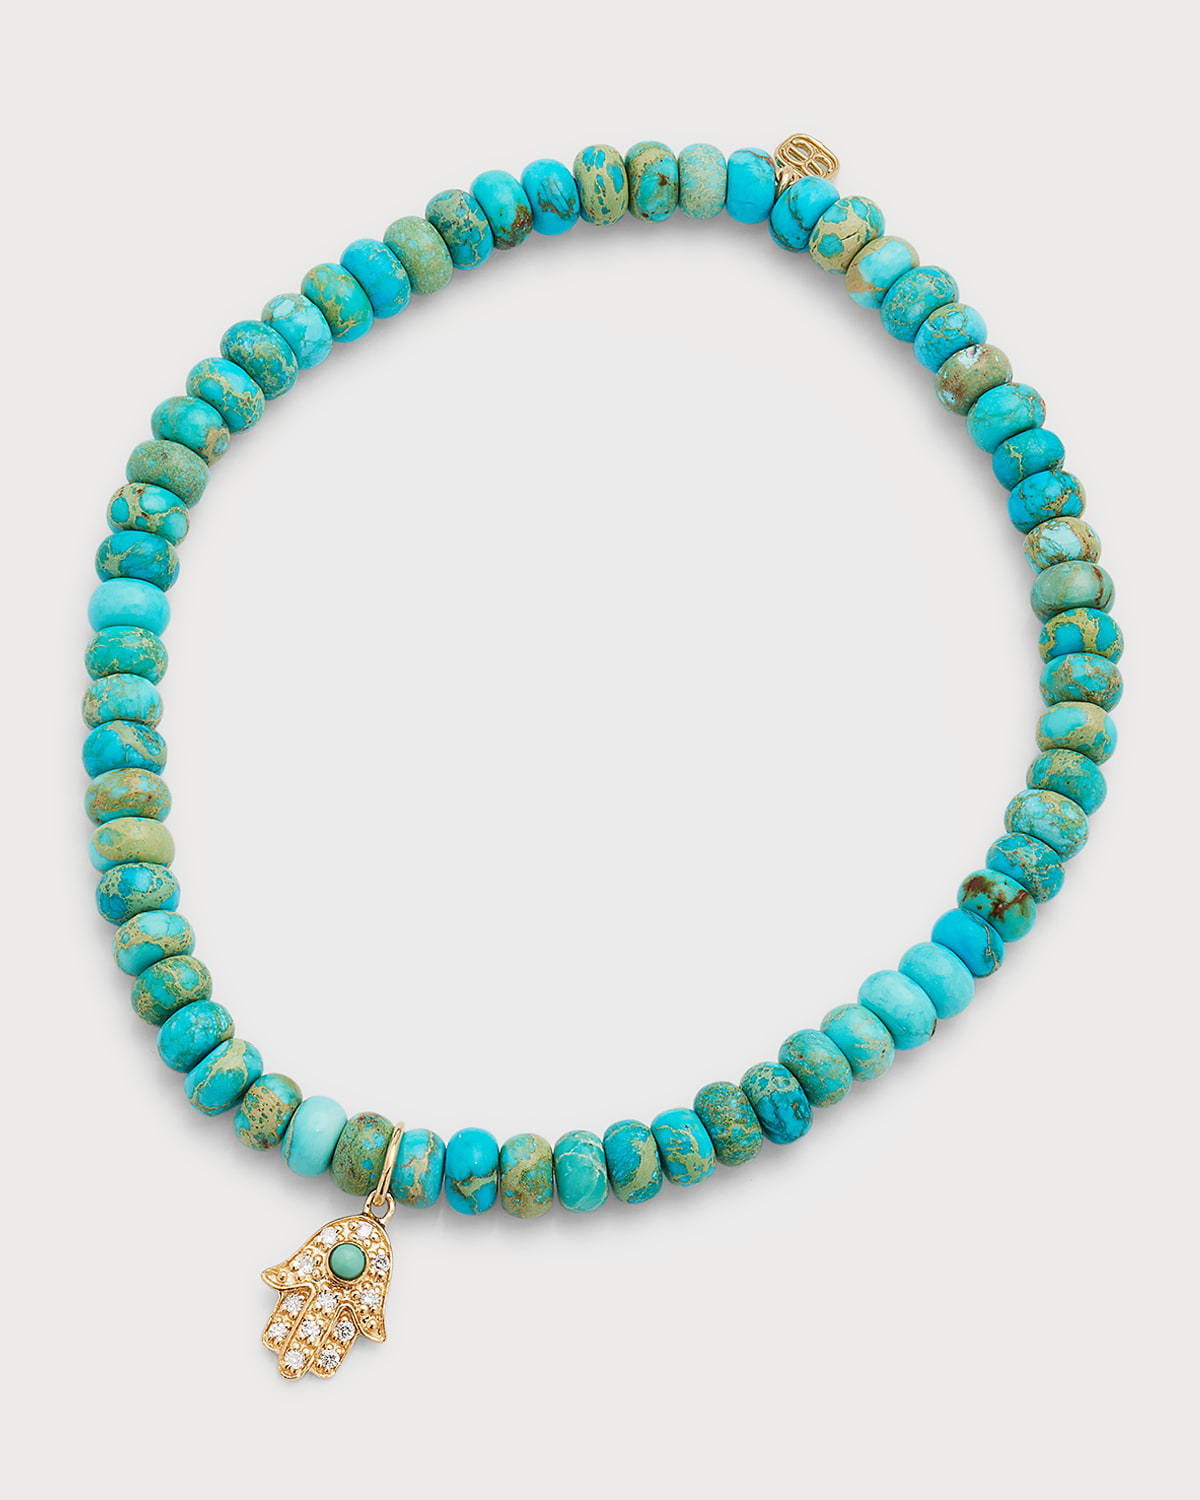 4mm Natural Turquoise Smooth Rondelle Bead Bracelet with Diamond Hamsa Charm